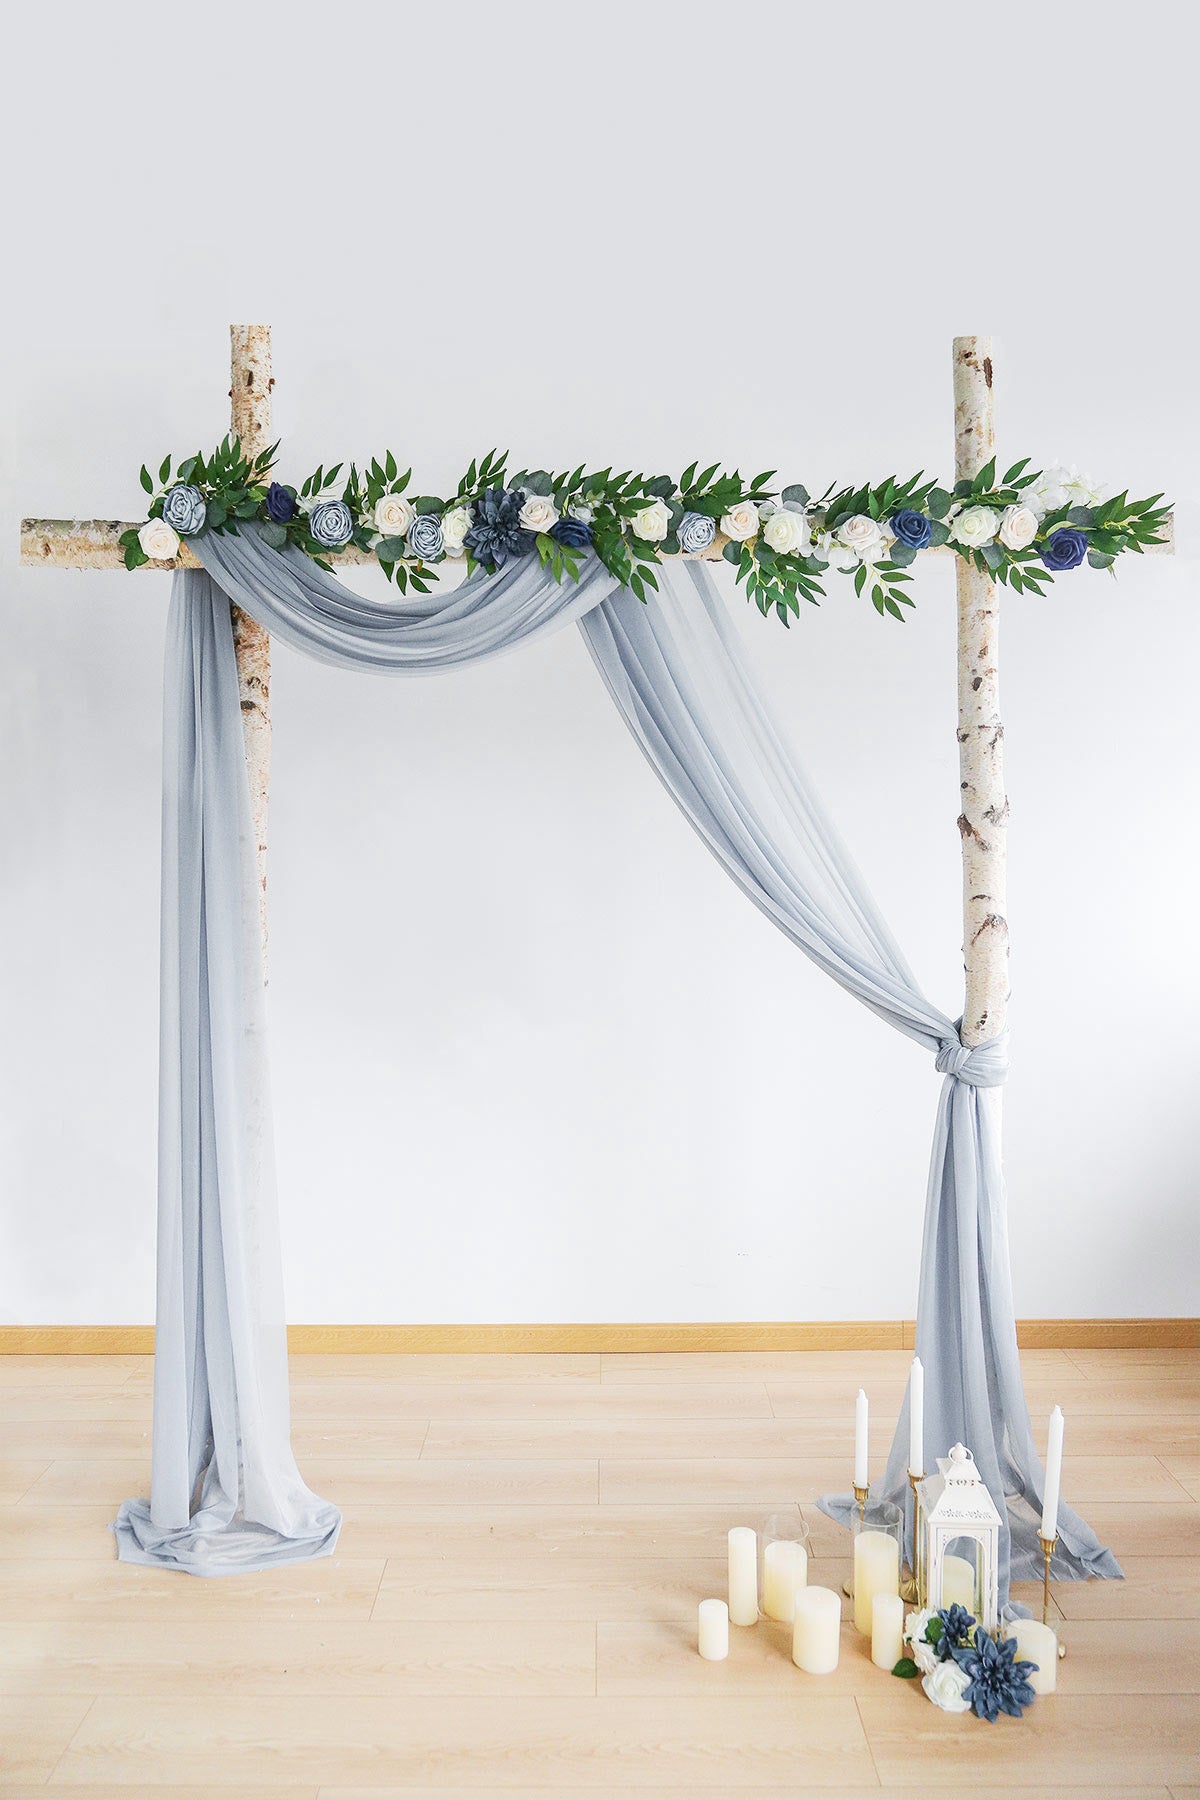 2 Pcs Rustic Wedding Arch Draping 29"w x 19.7ft - Silver Gray